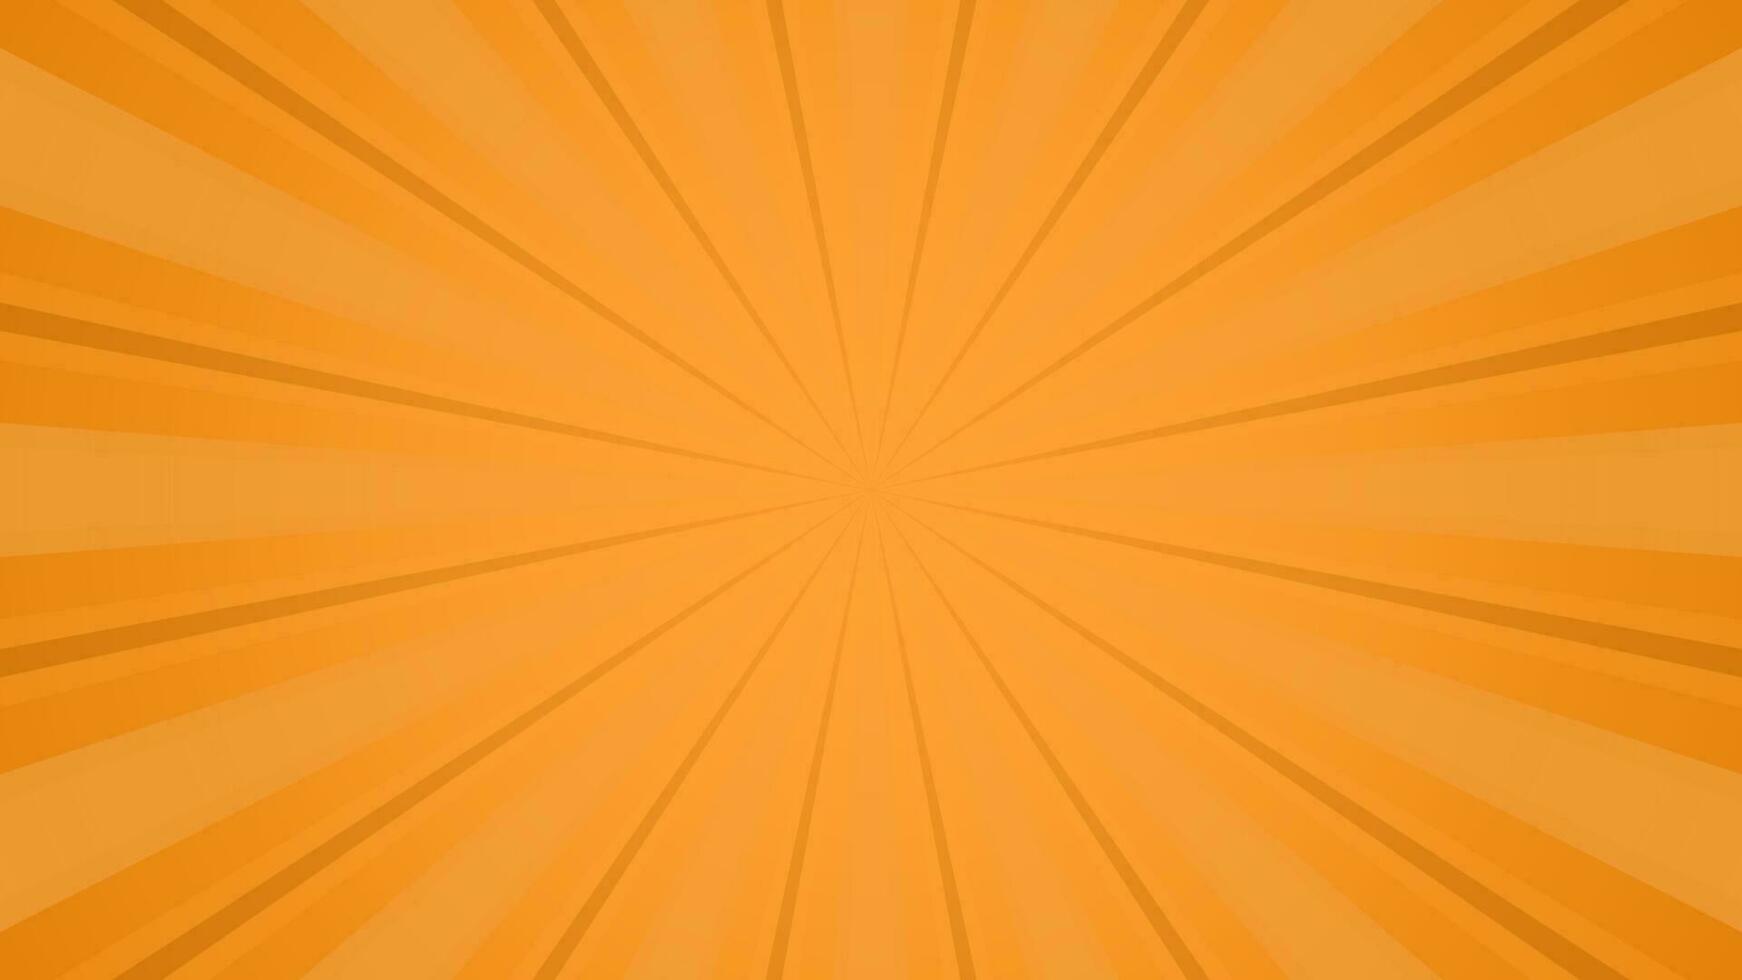 Soft Orange Sun burst vector background